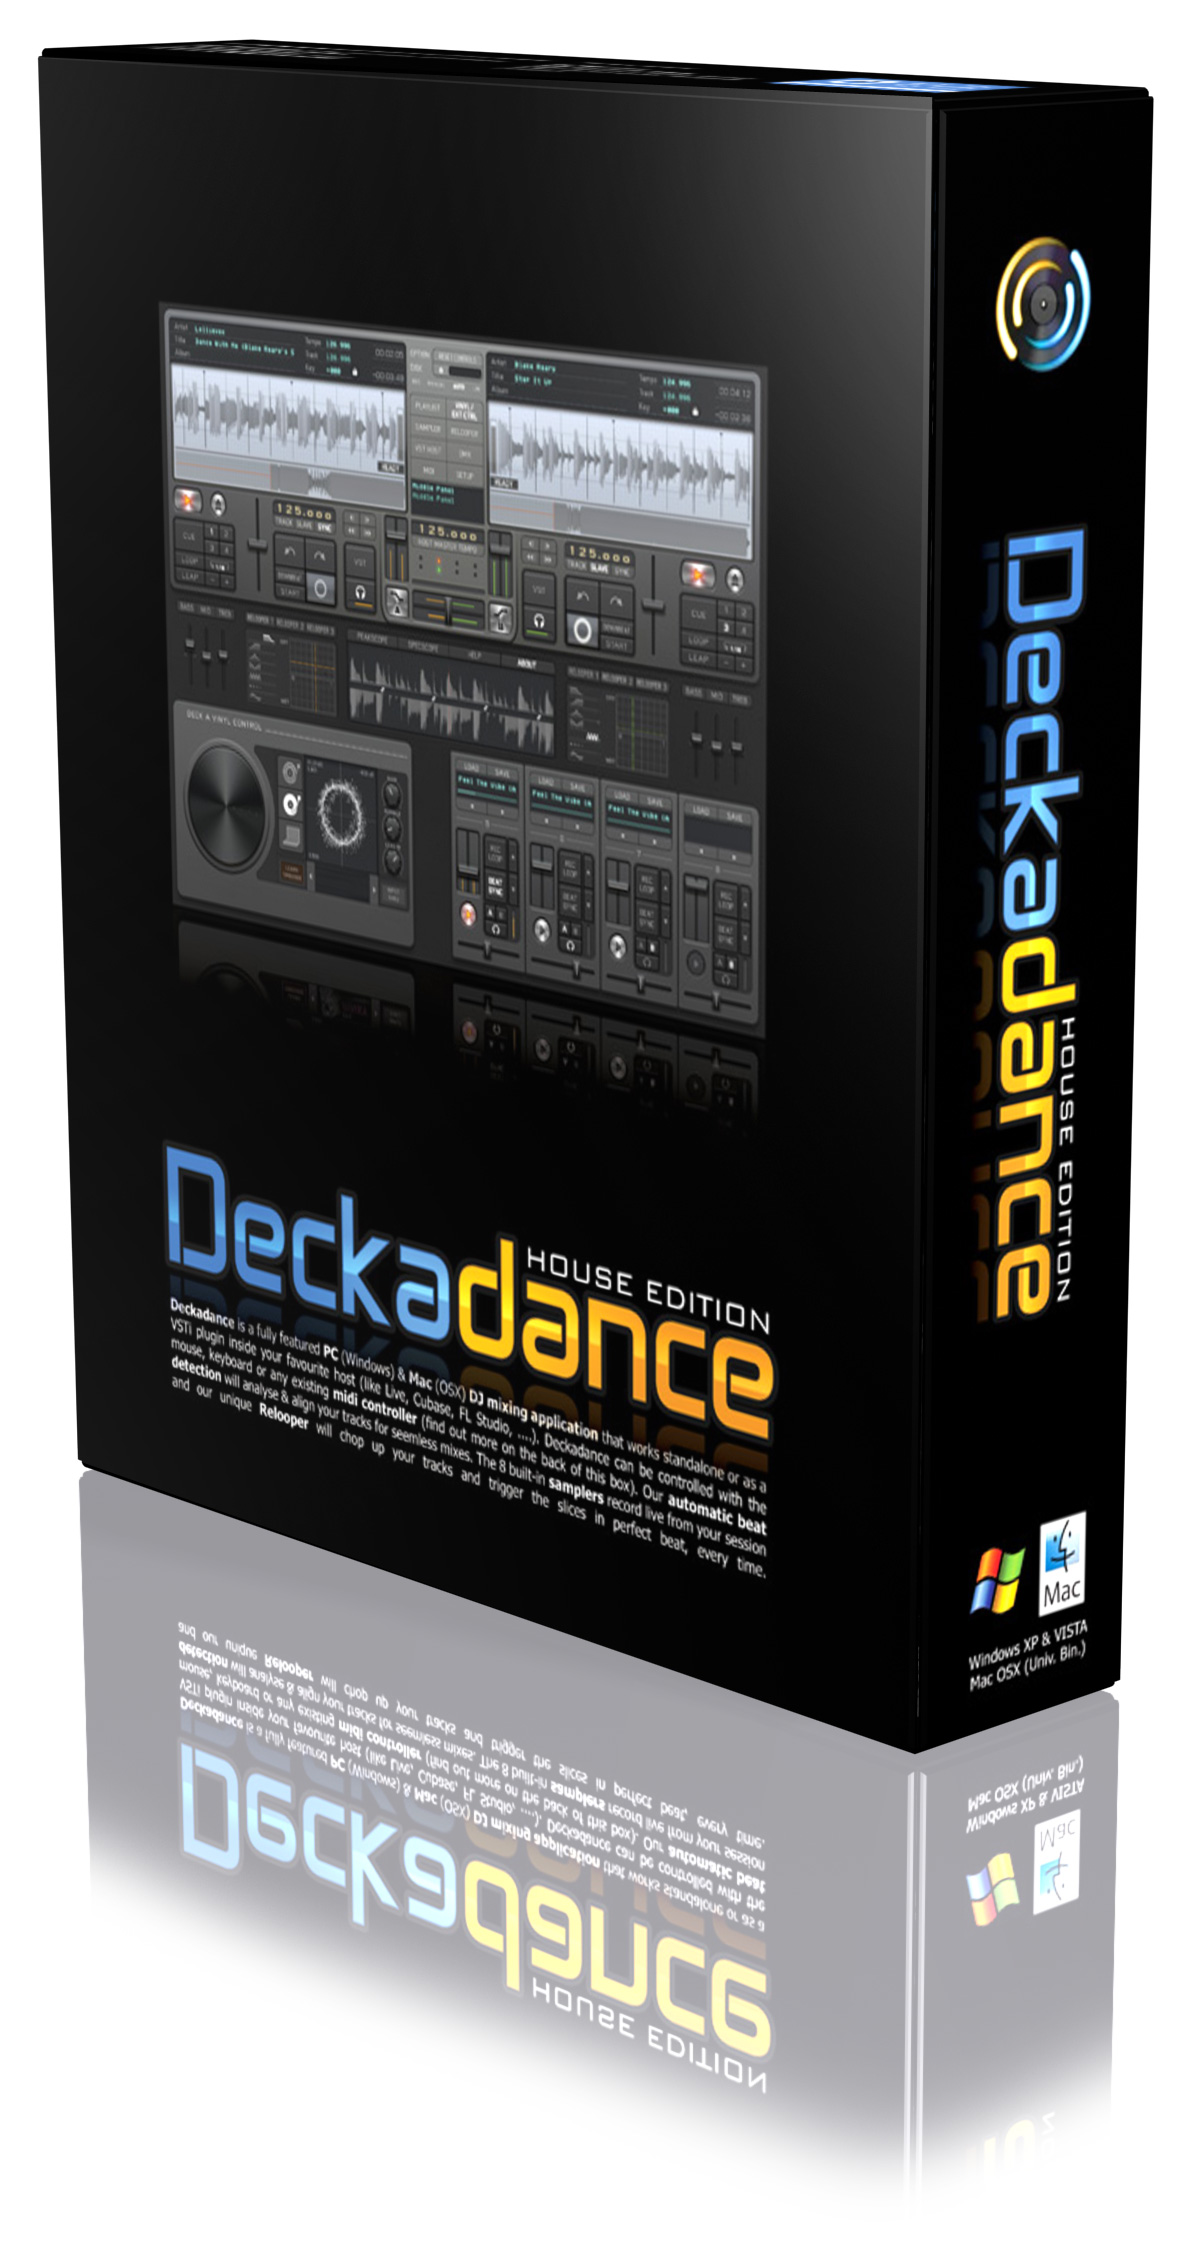 Image-Line Software Updates its DJ Mixing Software Deckadance to